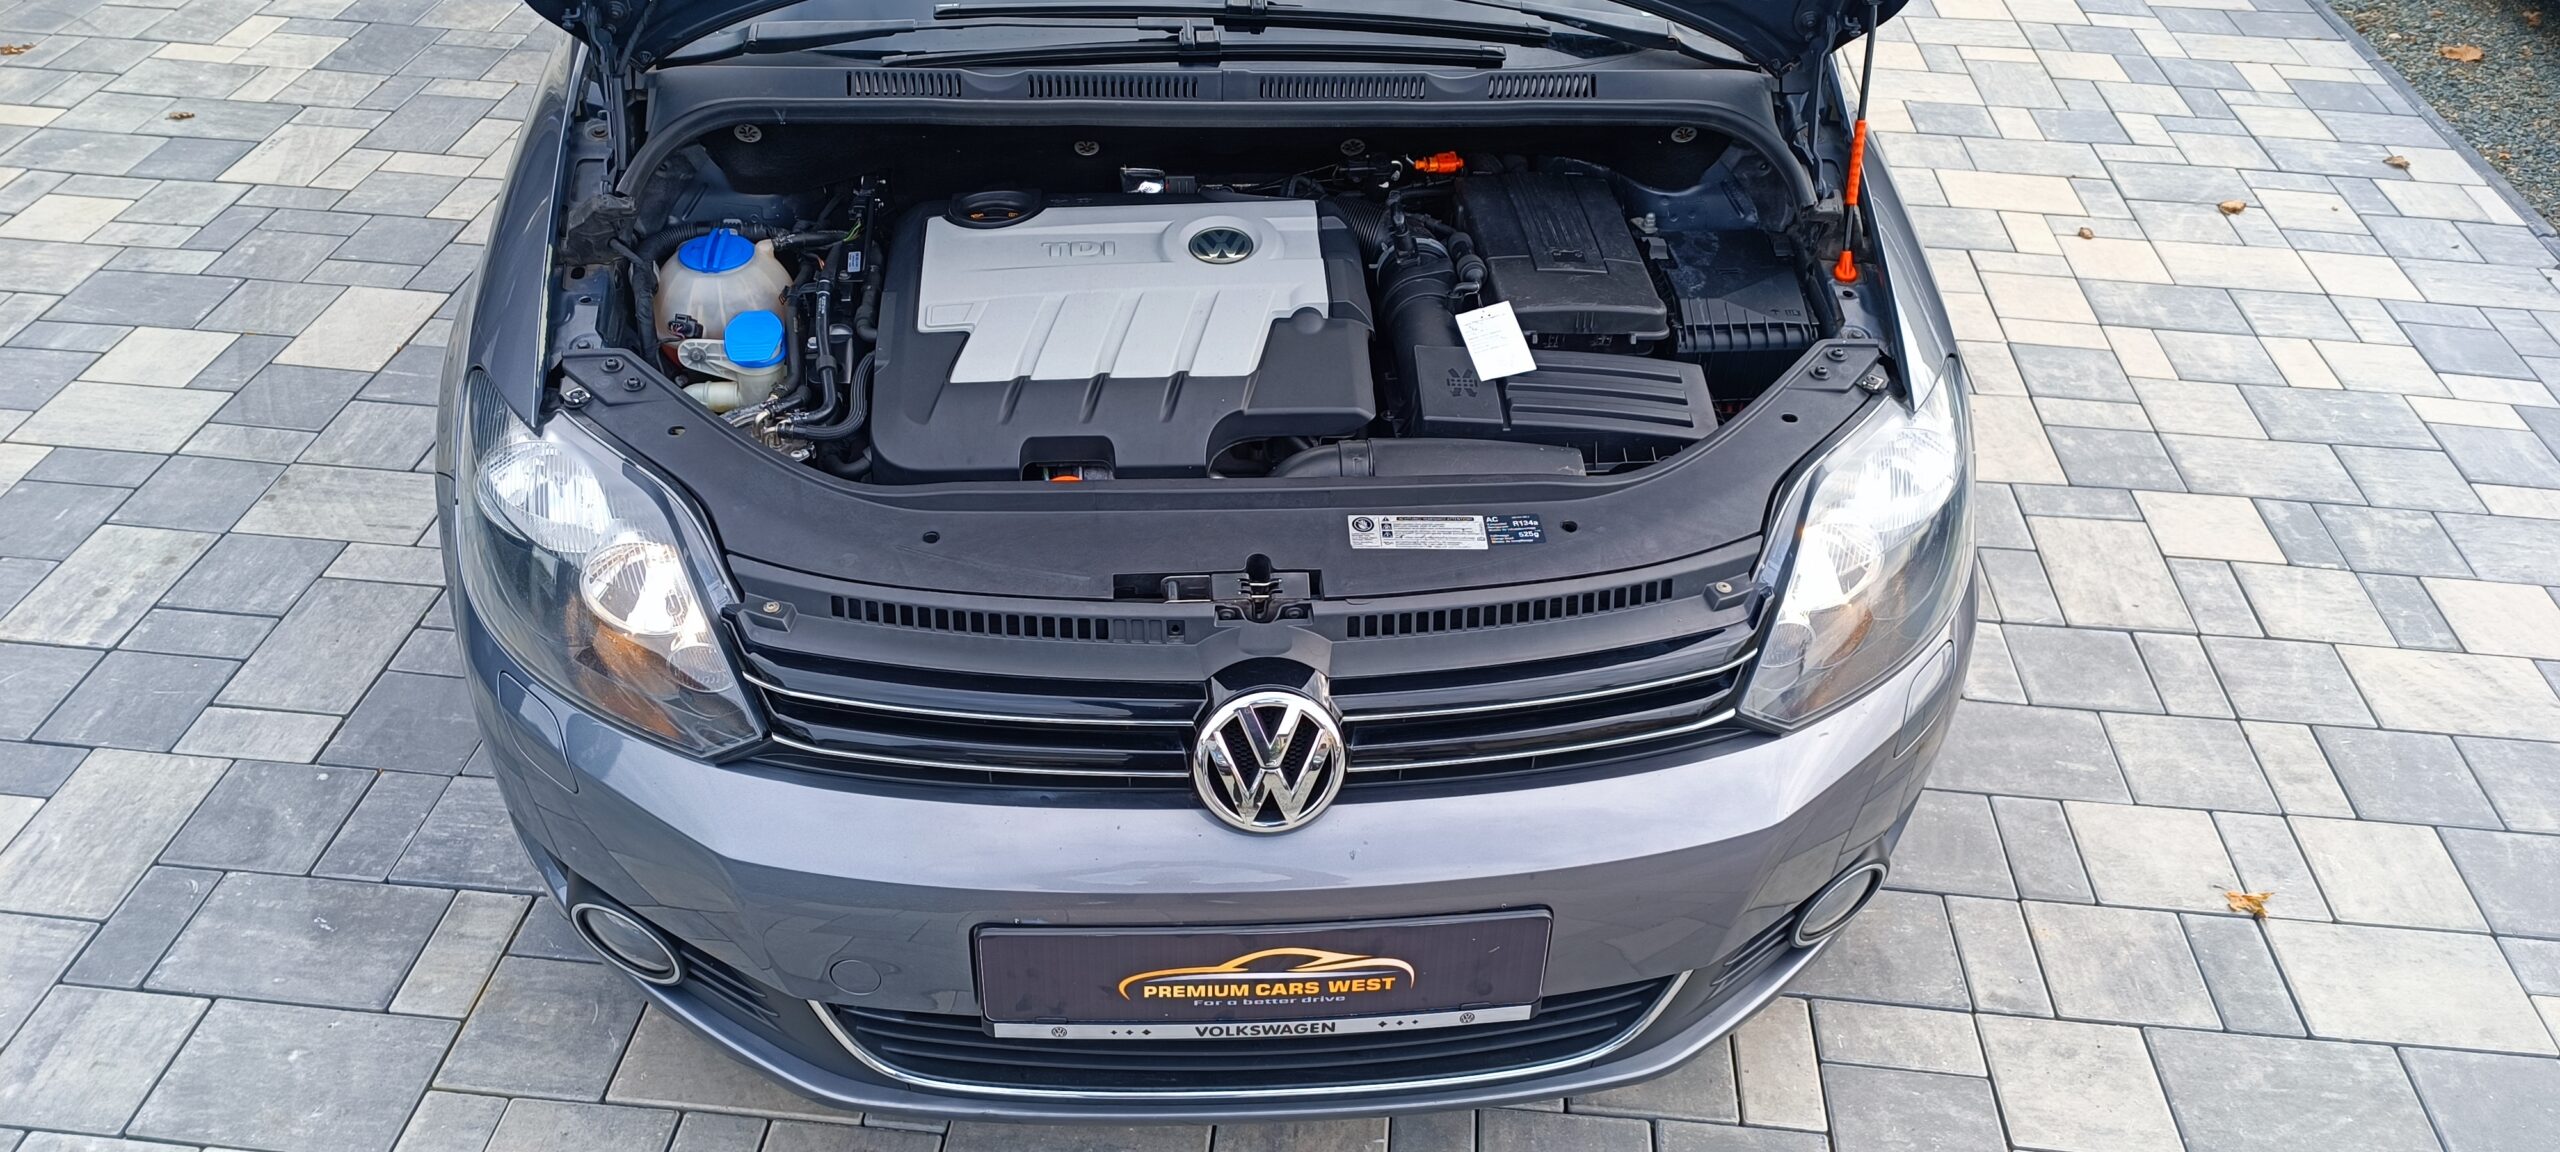 VW GOLF 6 PLUS, 2.0 TDI, EURO 5